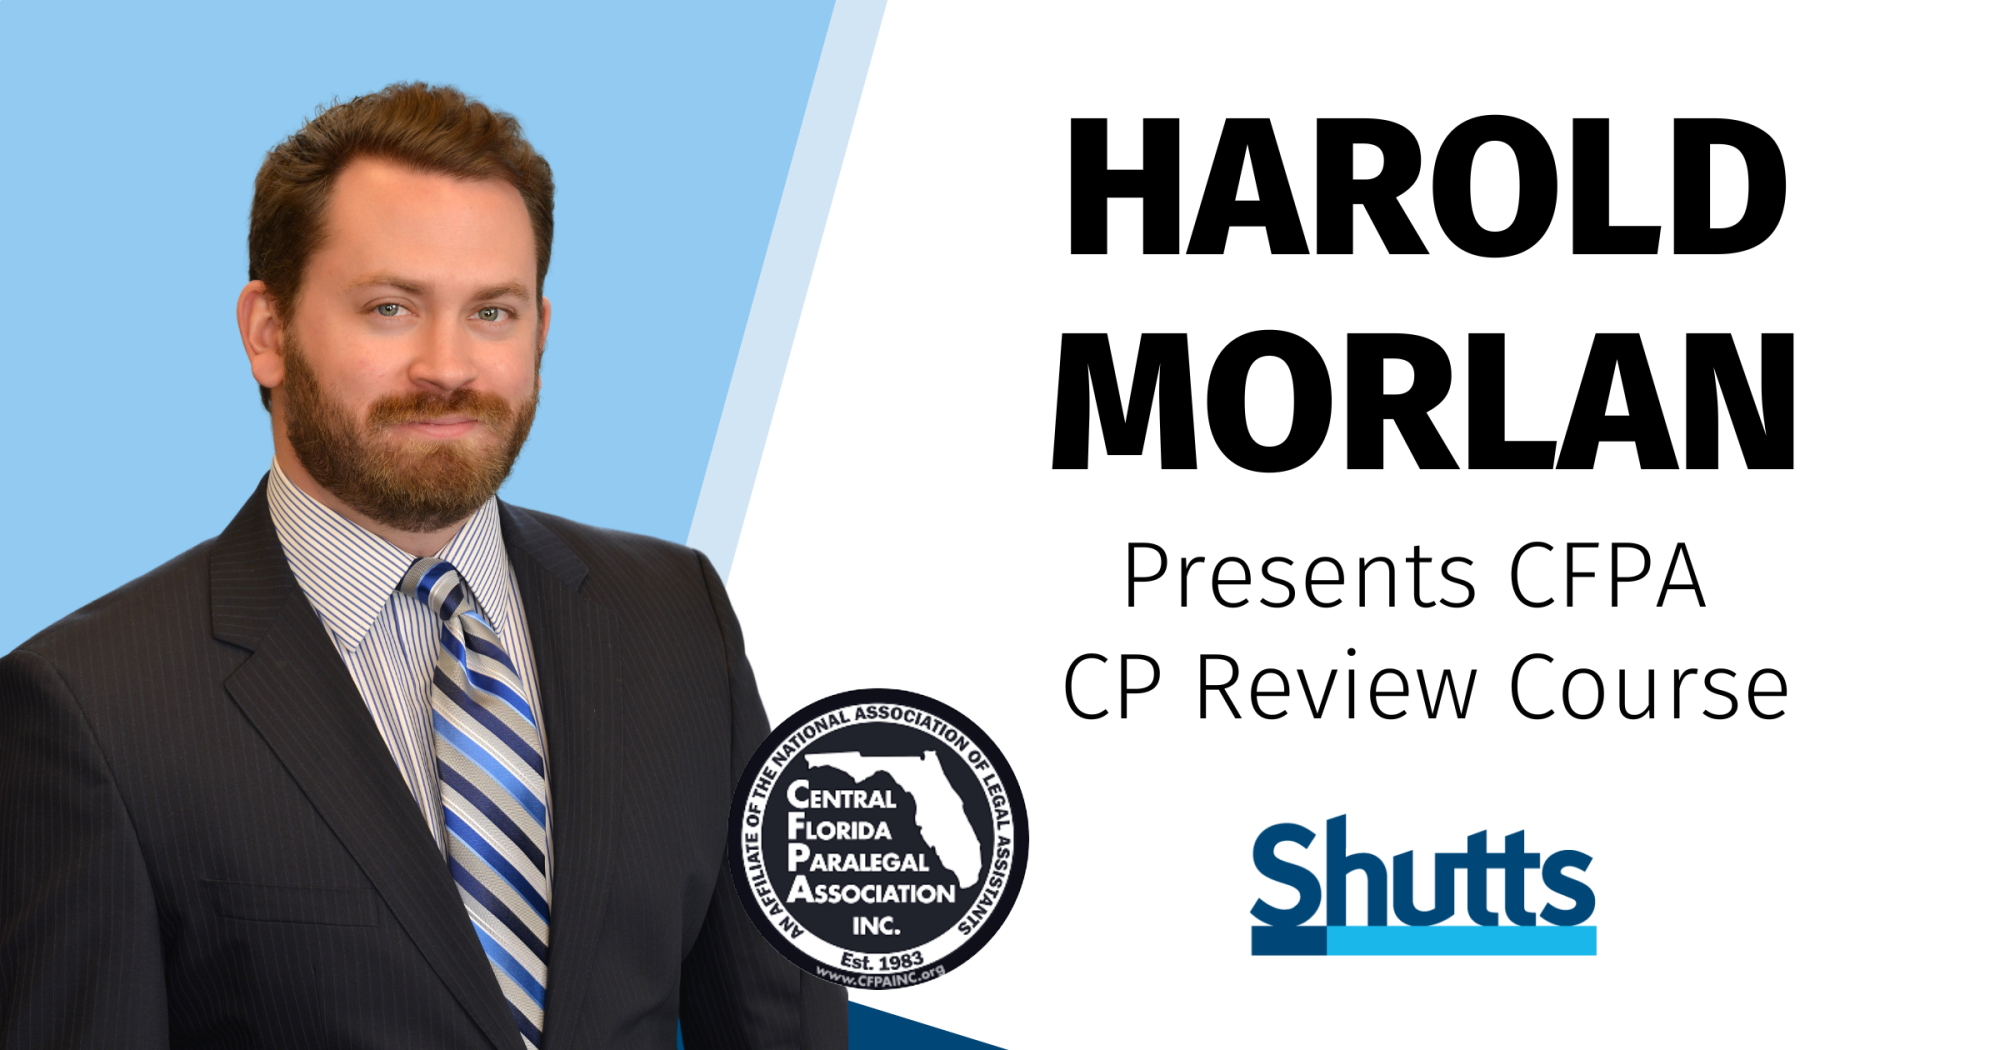 Harold Morlan Presents CFPA CP Review Course